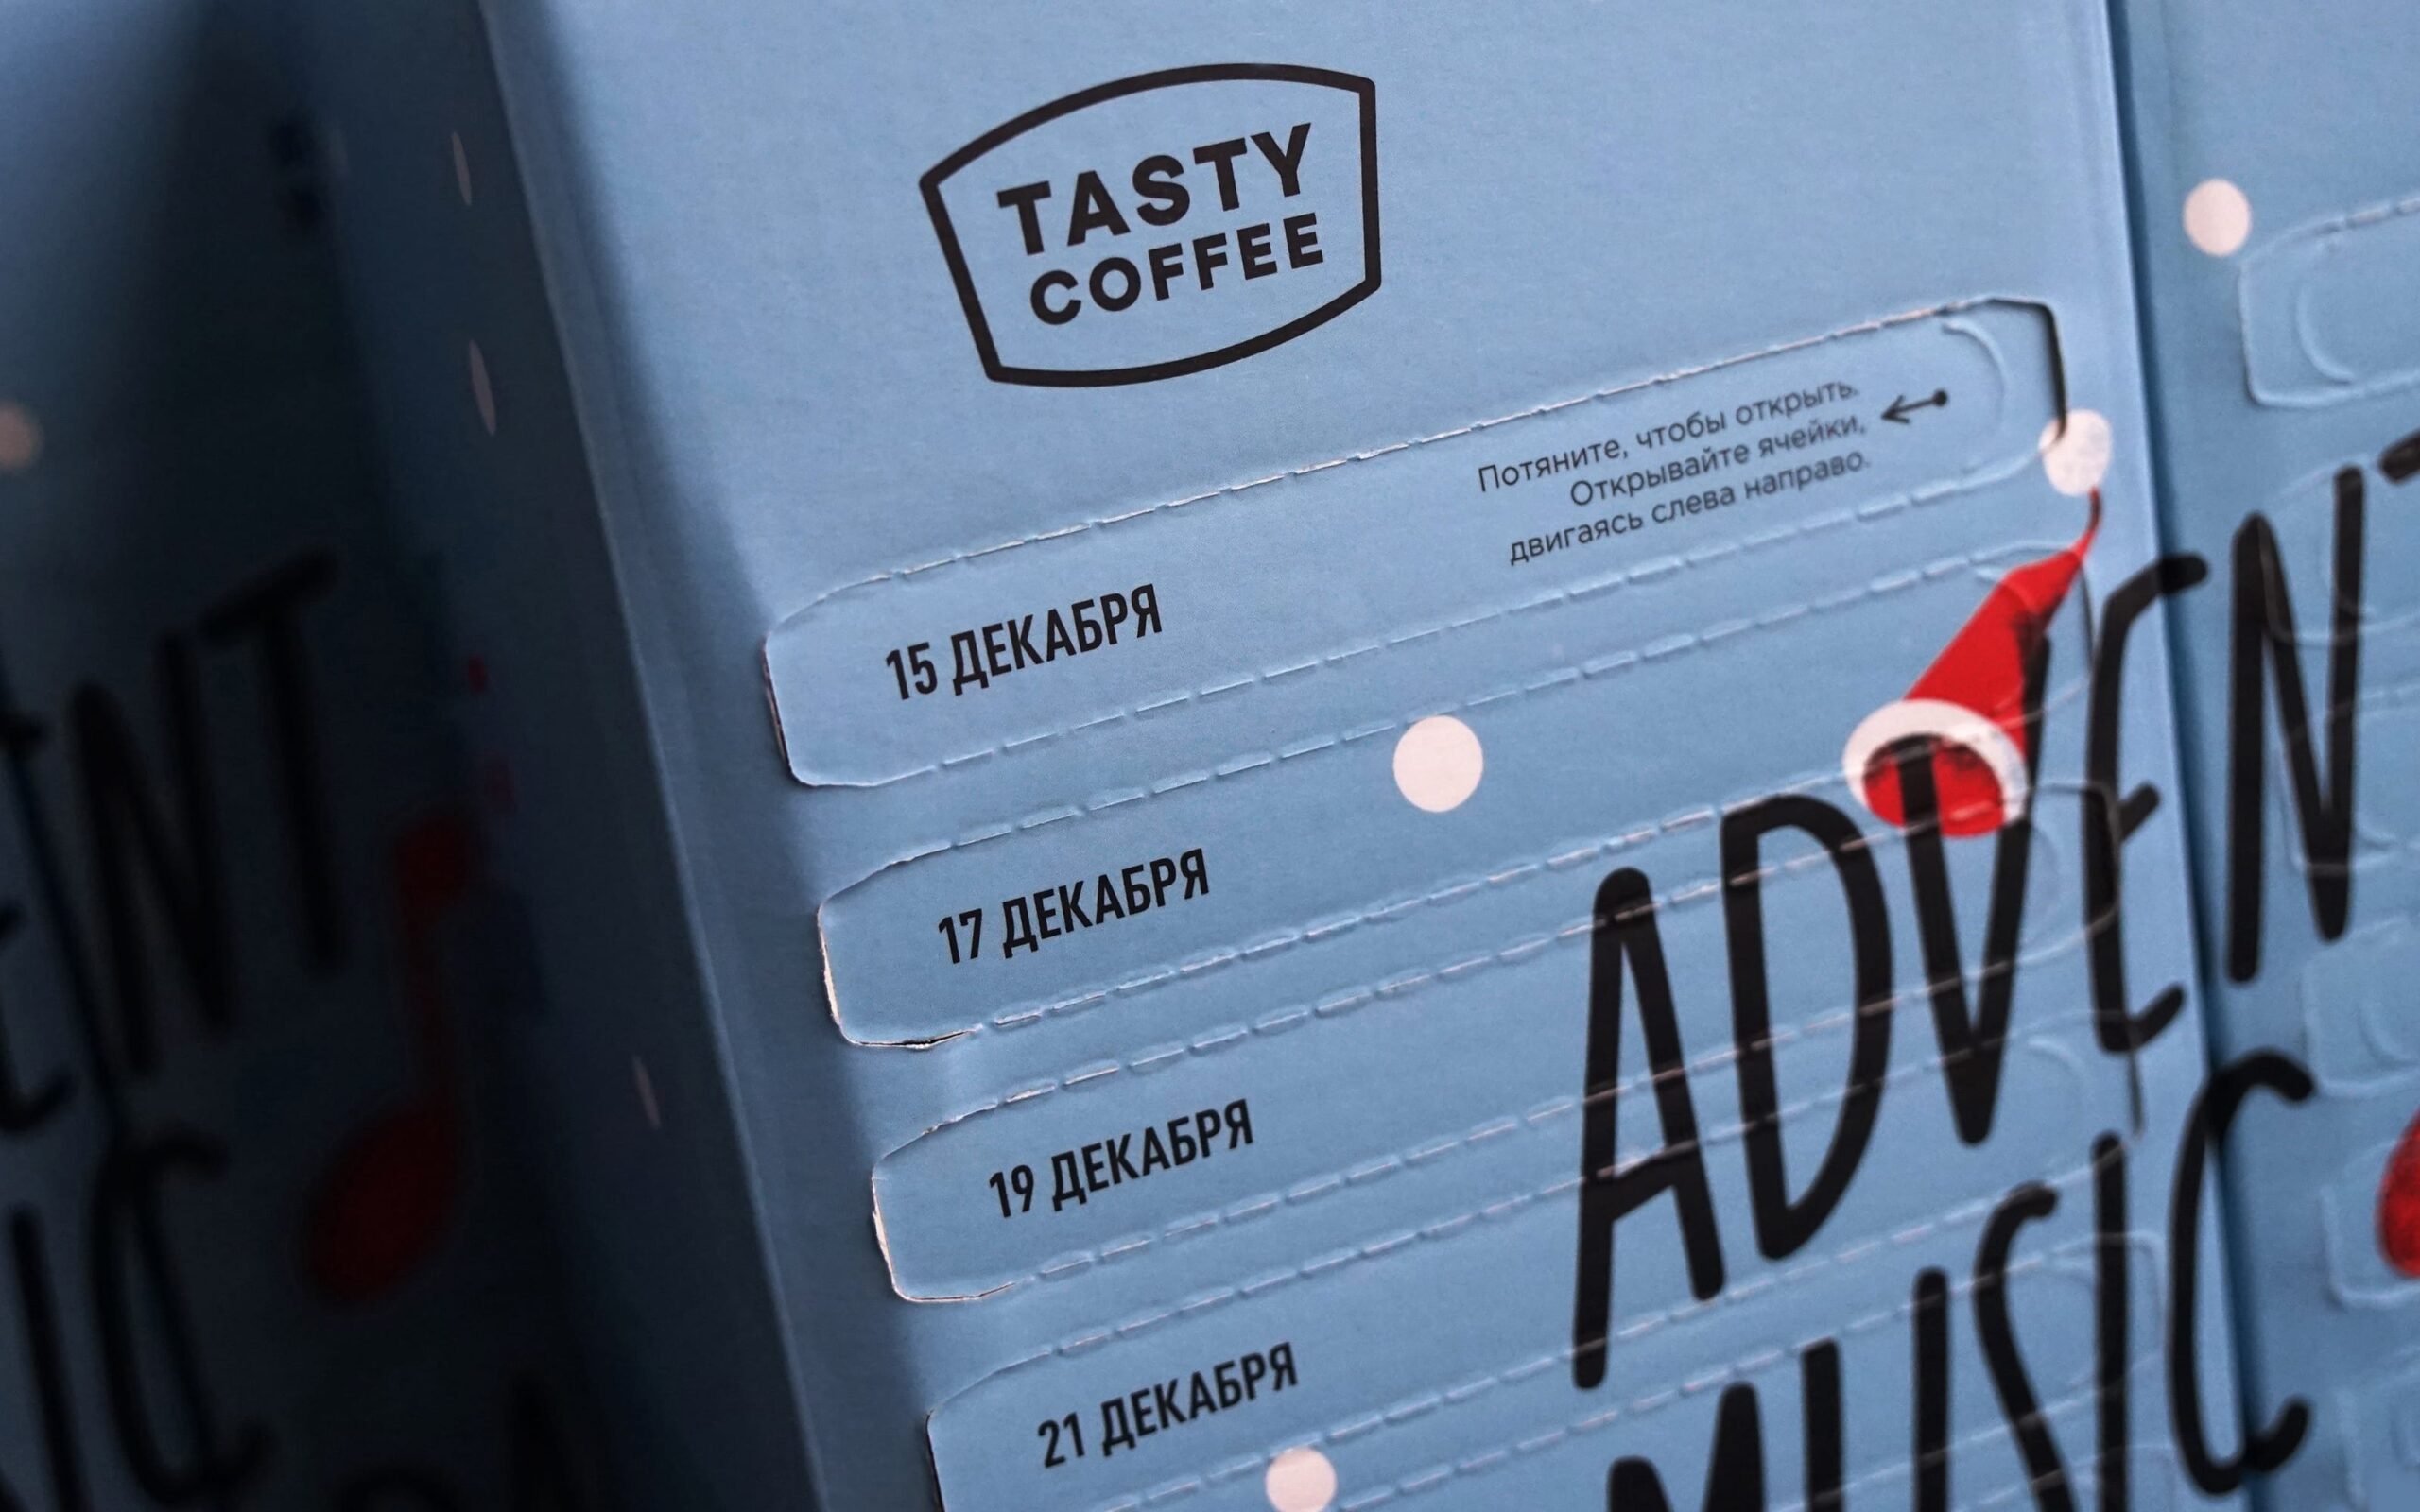 Дизайн адвент-календаря TASTY COFFEE 2024